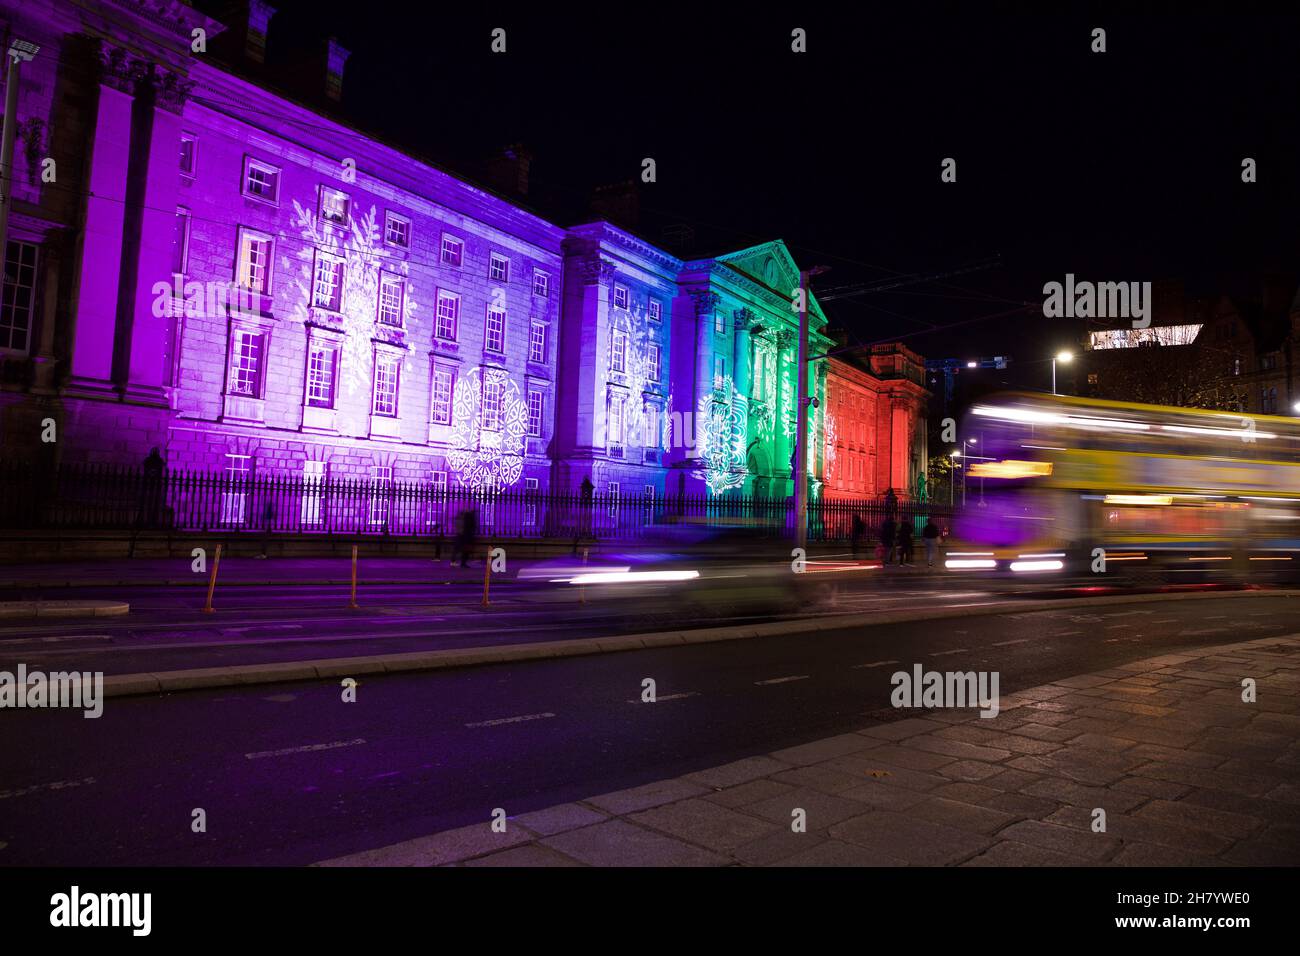 Dublin, Ireland - November 24, 2021: Trinity College Dublin on College Green illuminated with a festive Christmas light show. Stock Photo